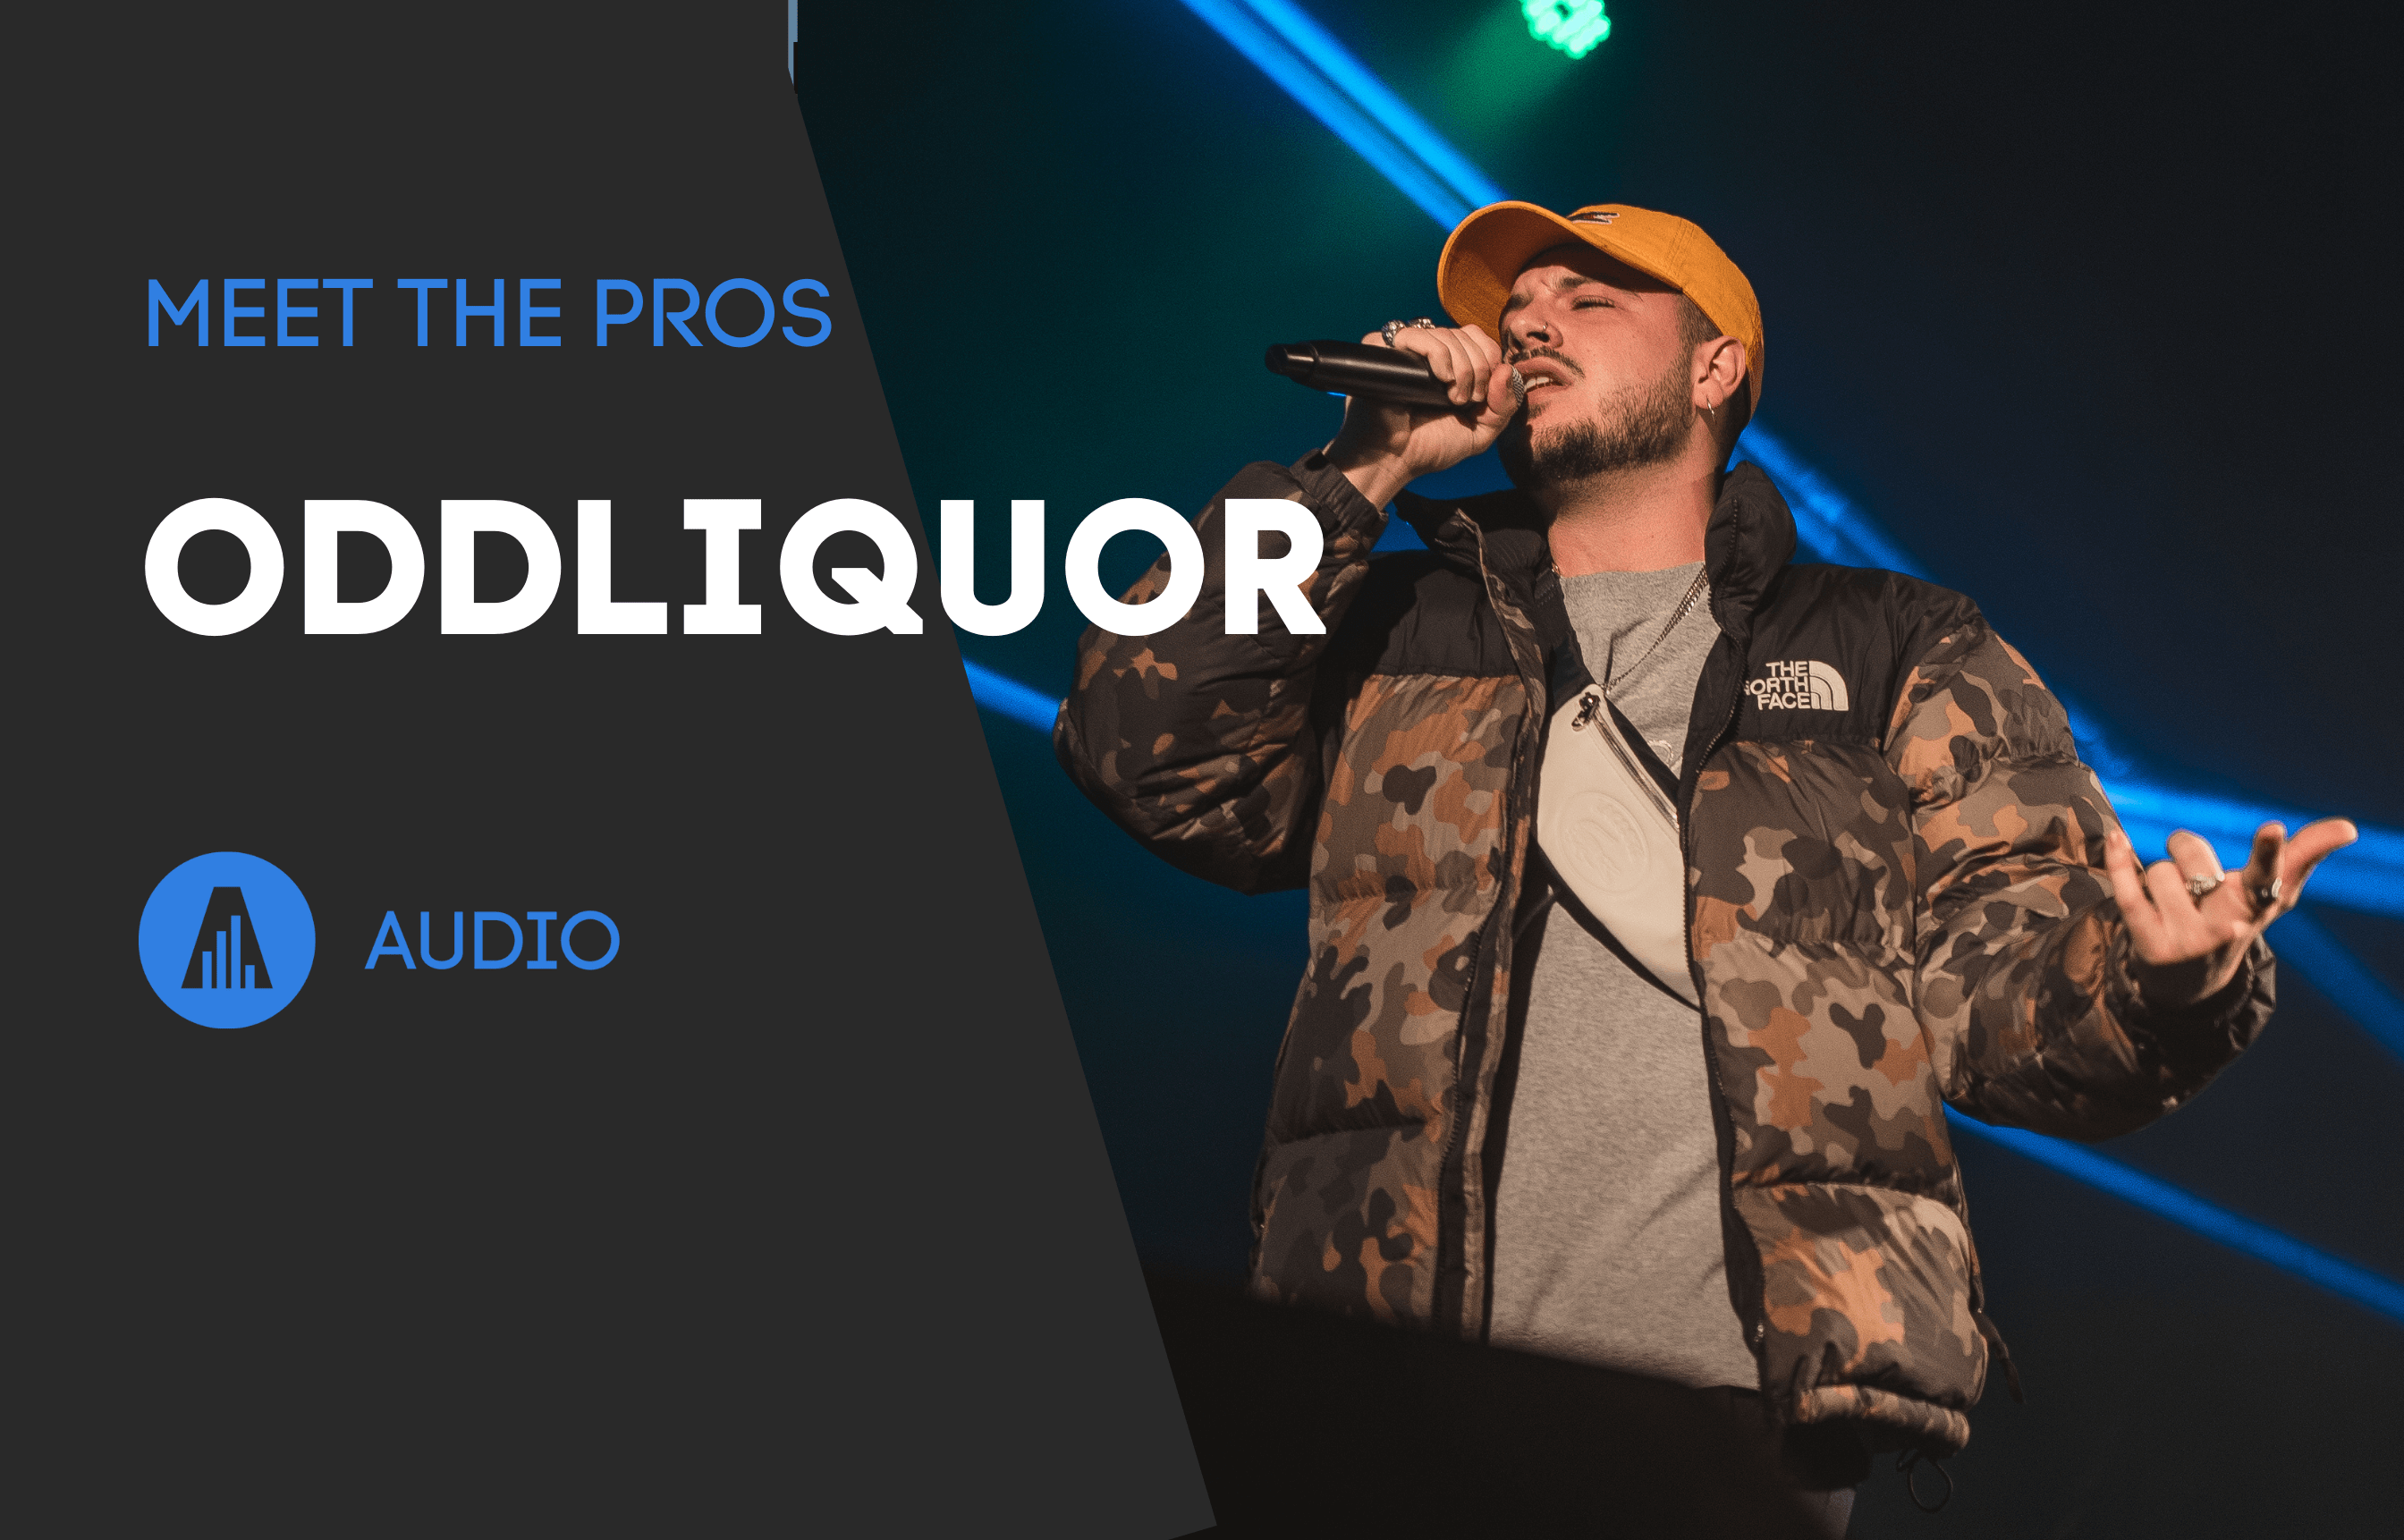 Meet The Pros - Oddliquor